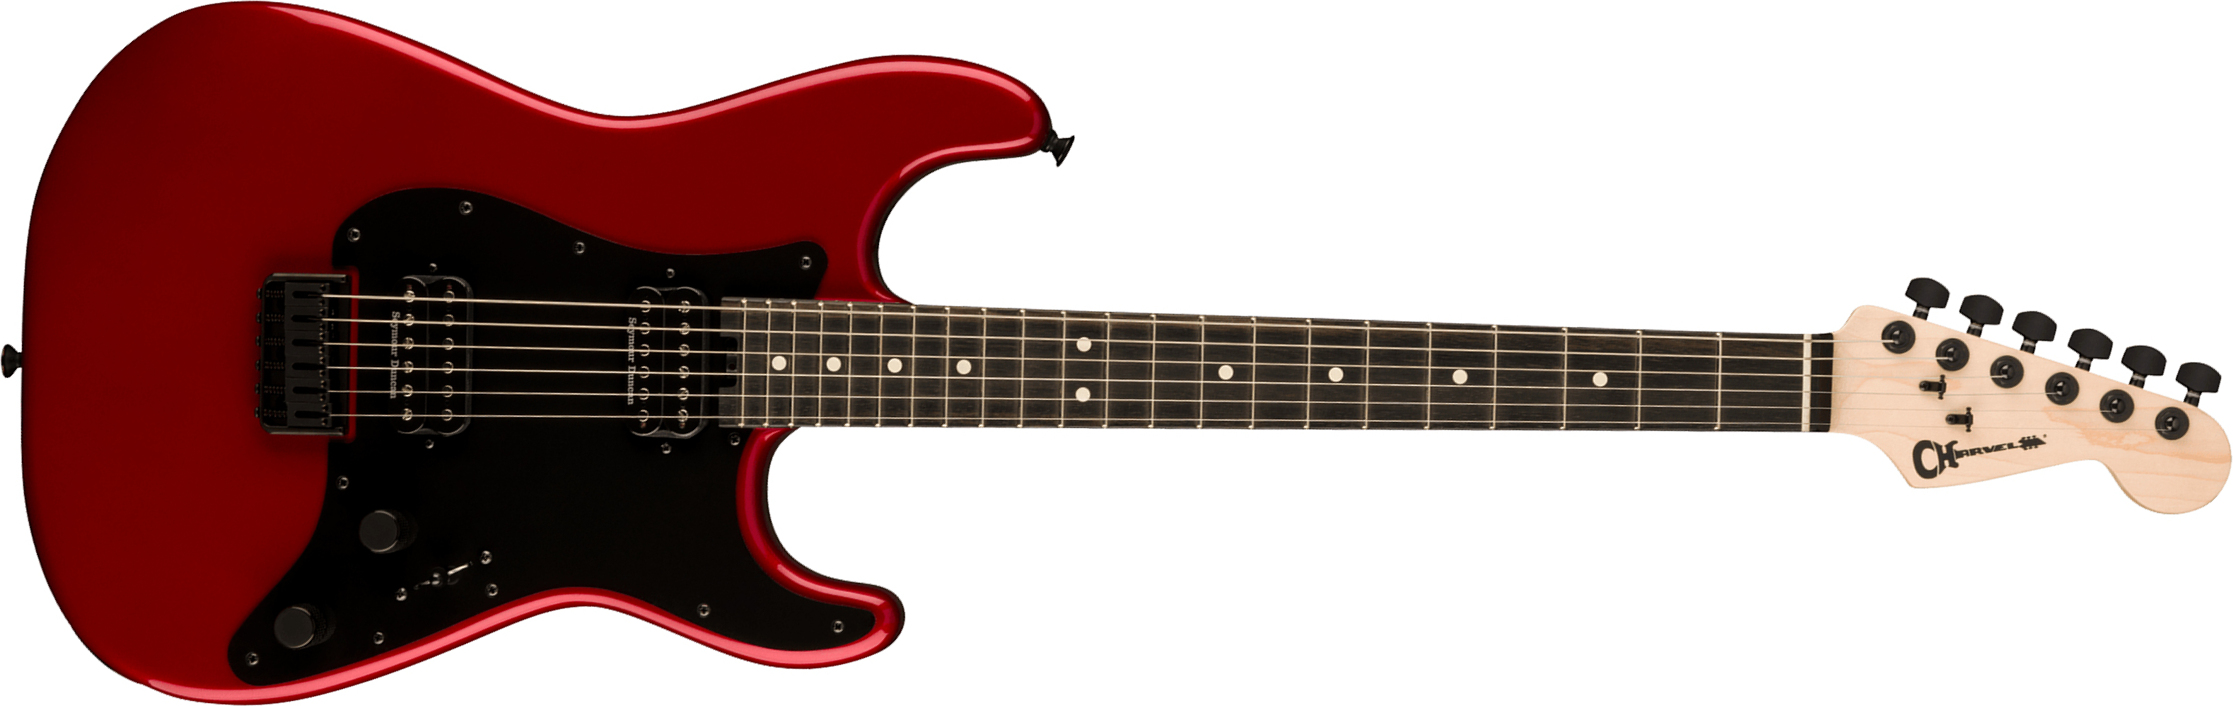 Charvel So-cal Style 1 Hh Ht E Pro-mod 2h Seymour Duncan Eb - Candy Apple Red - Guitarra eléctrica con forma de str. - Main picture